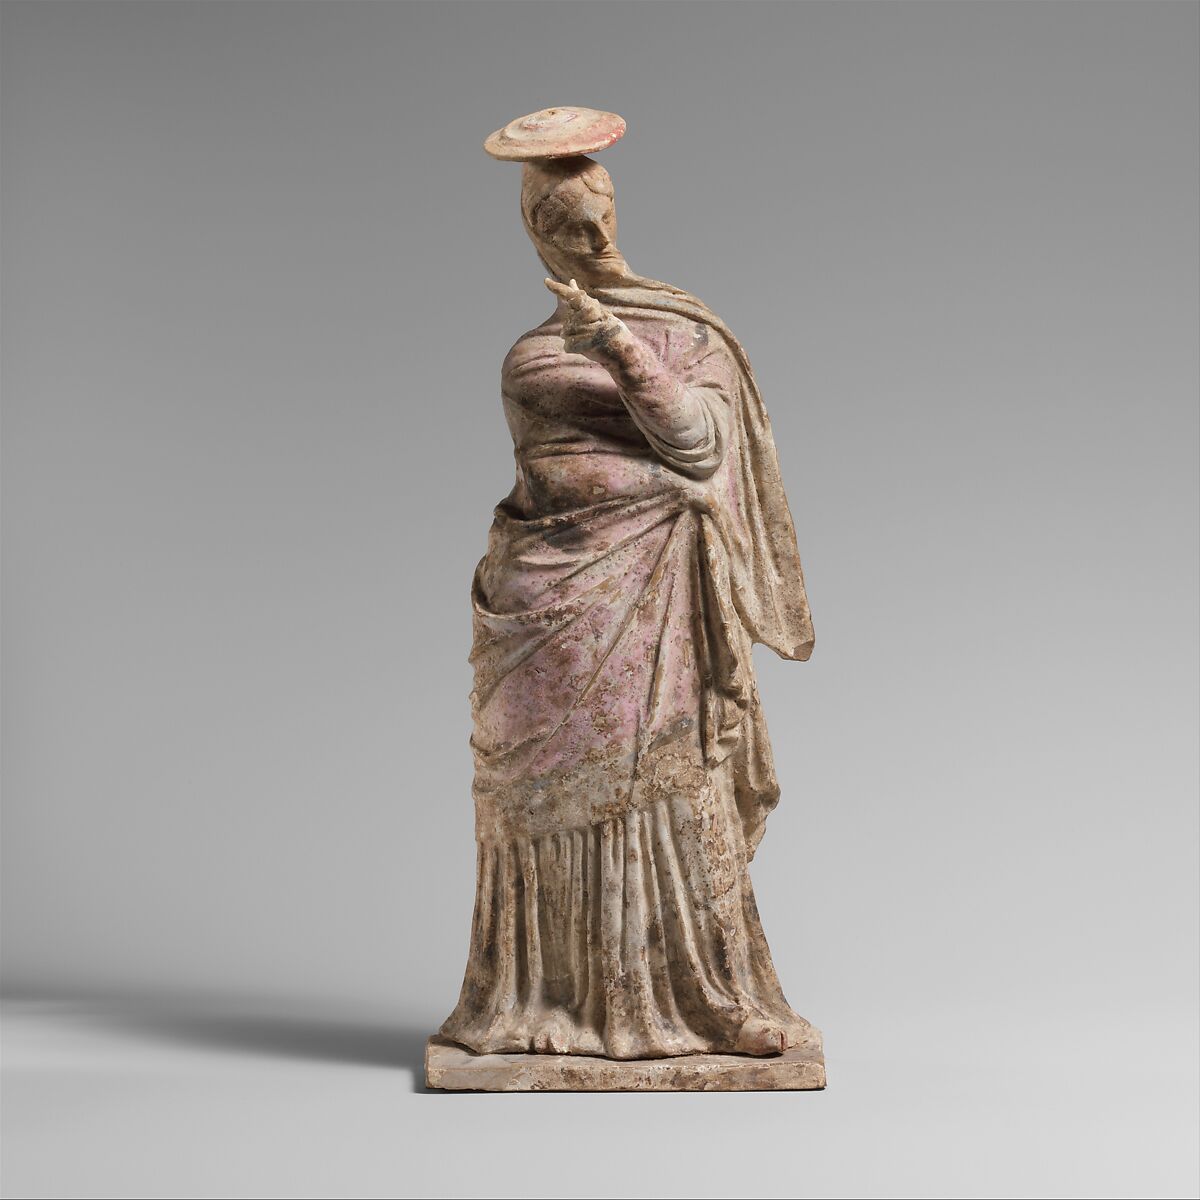 Terracotta statuette of a woman, Terracotta, Greek, perhaps from Asia Minor 